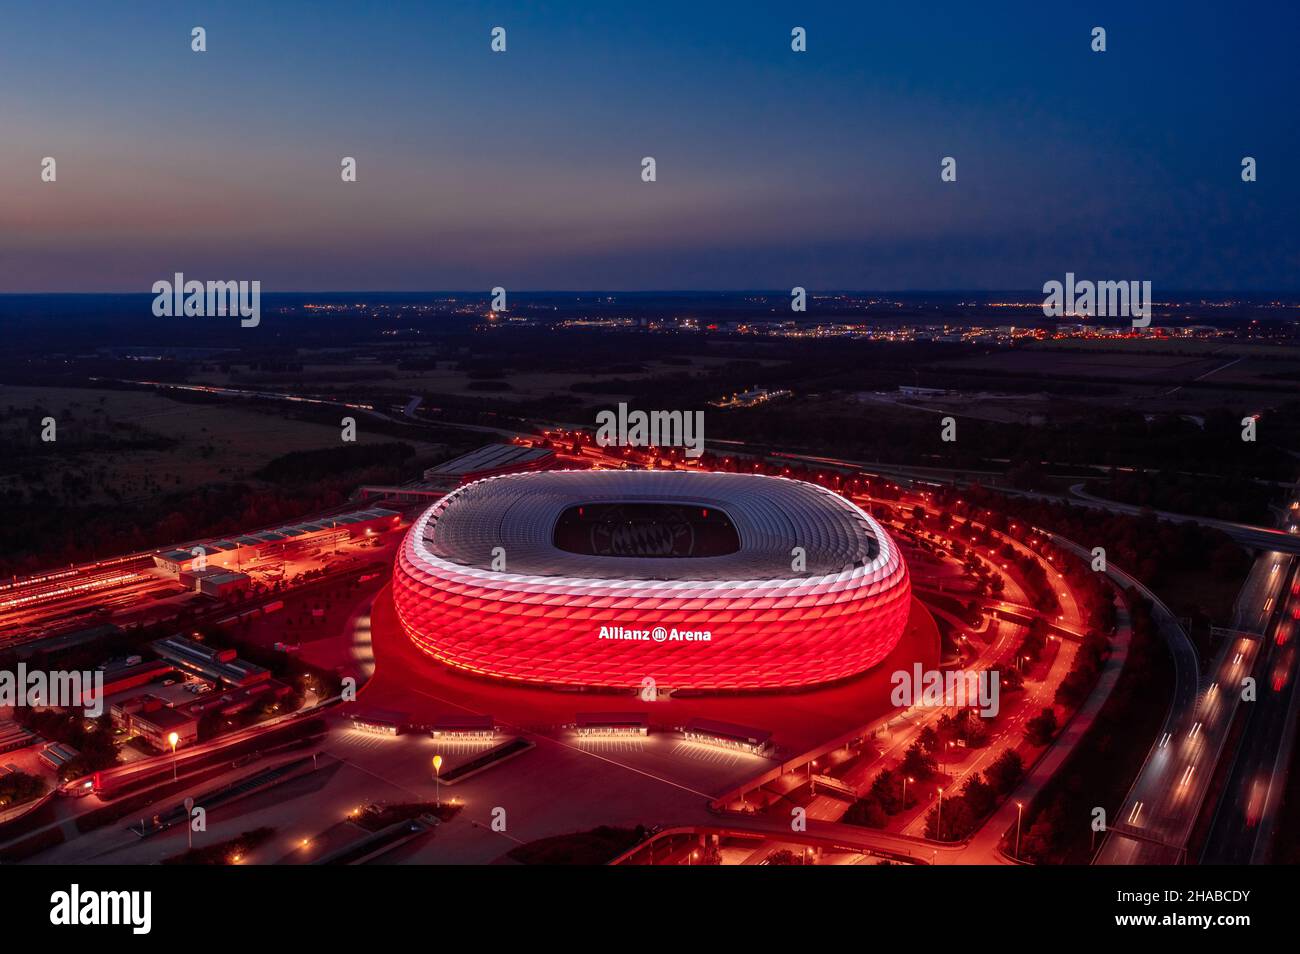 Allianz Arena - stade de Bayern Munich FC.2020 octobre - Munich, Allemagne. Banque D'Images